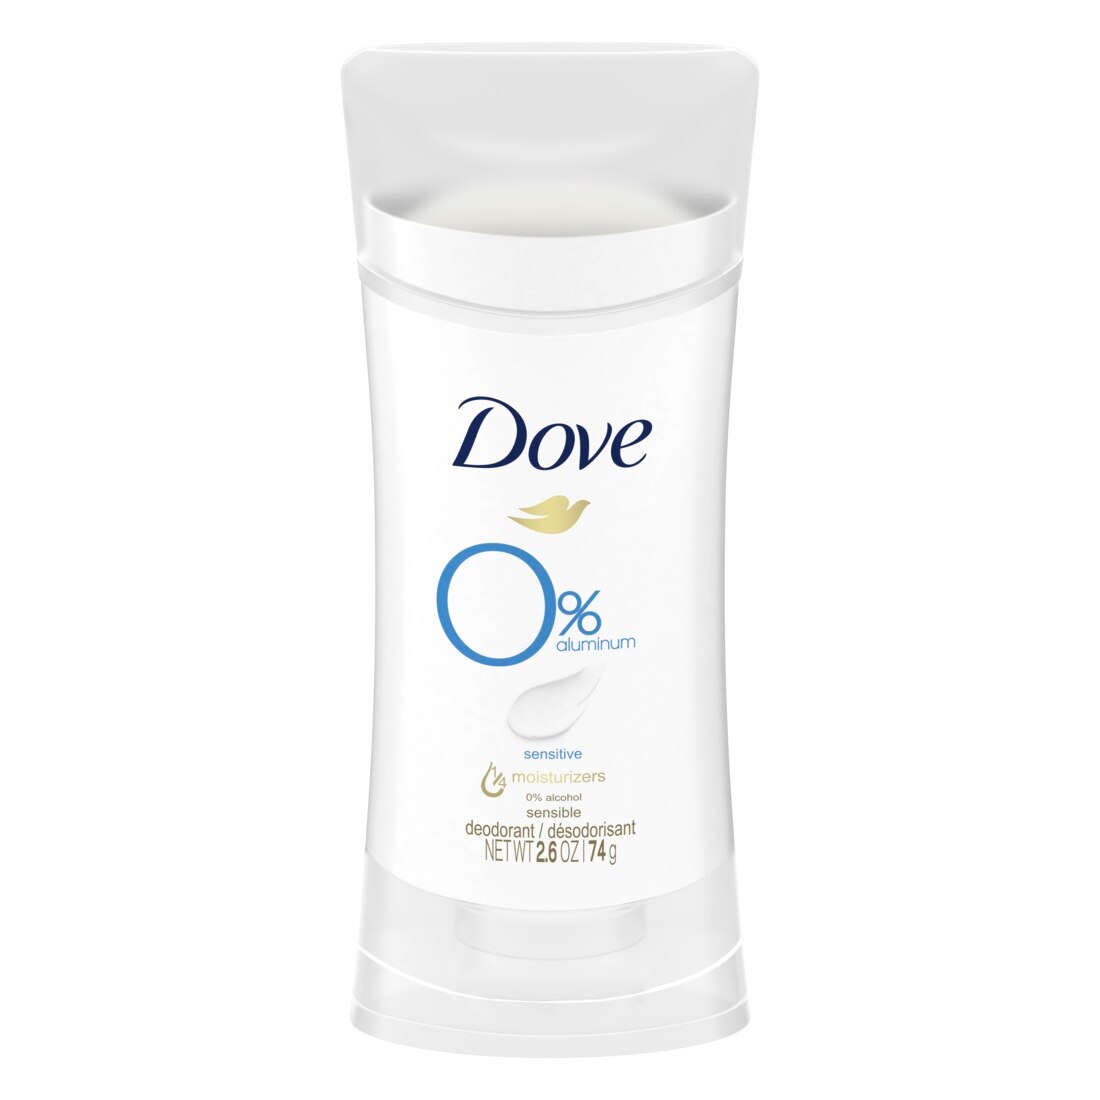 Dove Deodorant Stick 0% Aluminum - Sensitive, 2.6 OZ